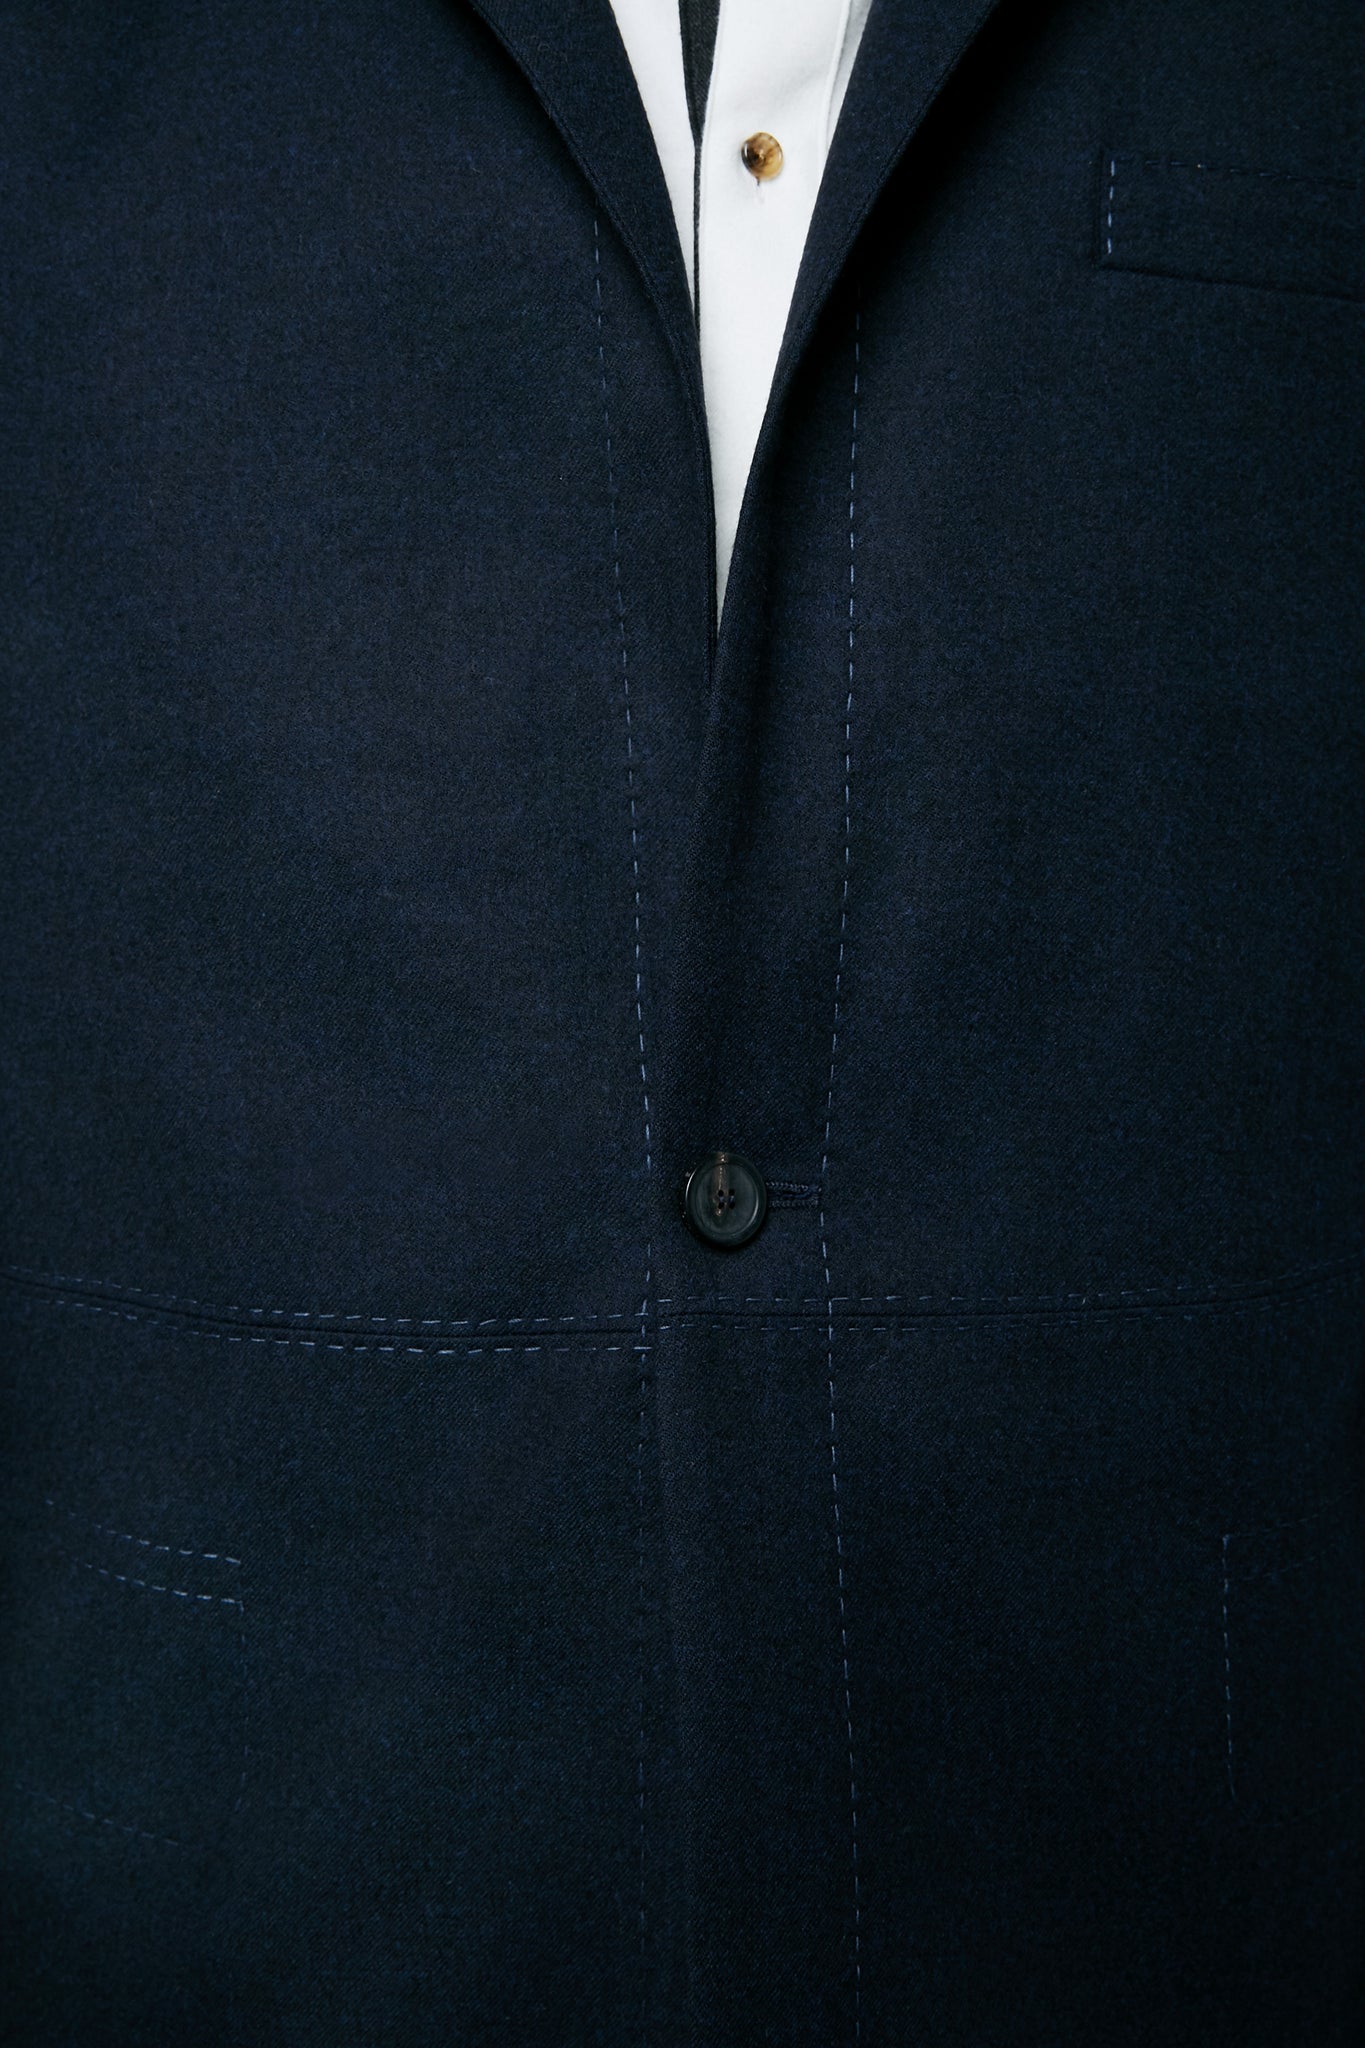 Detail View: Model Qiang Li wearing Architect's Jacket